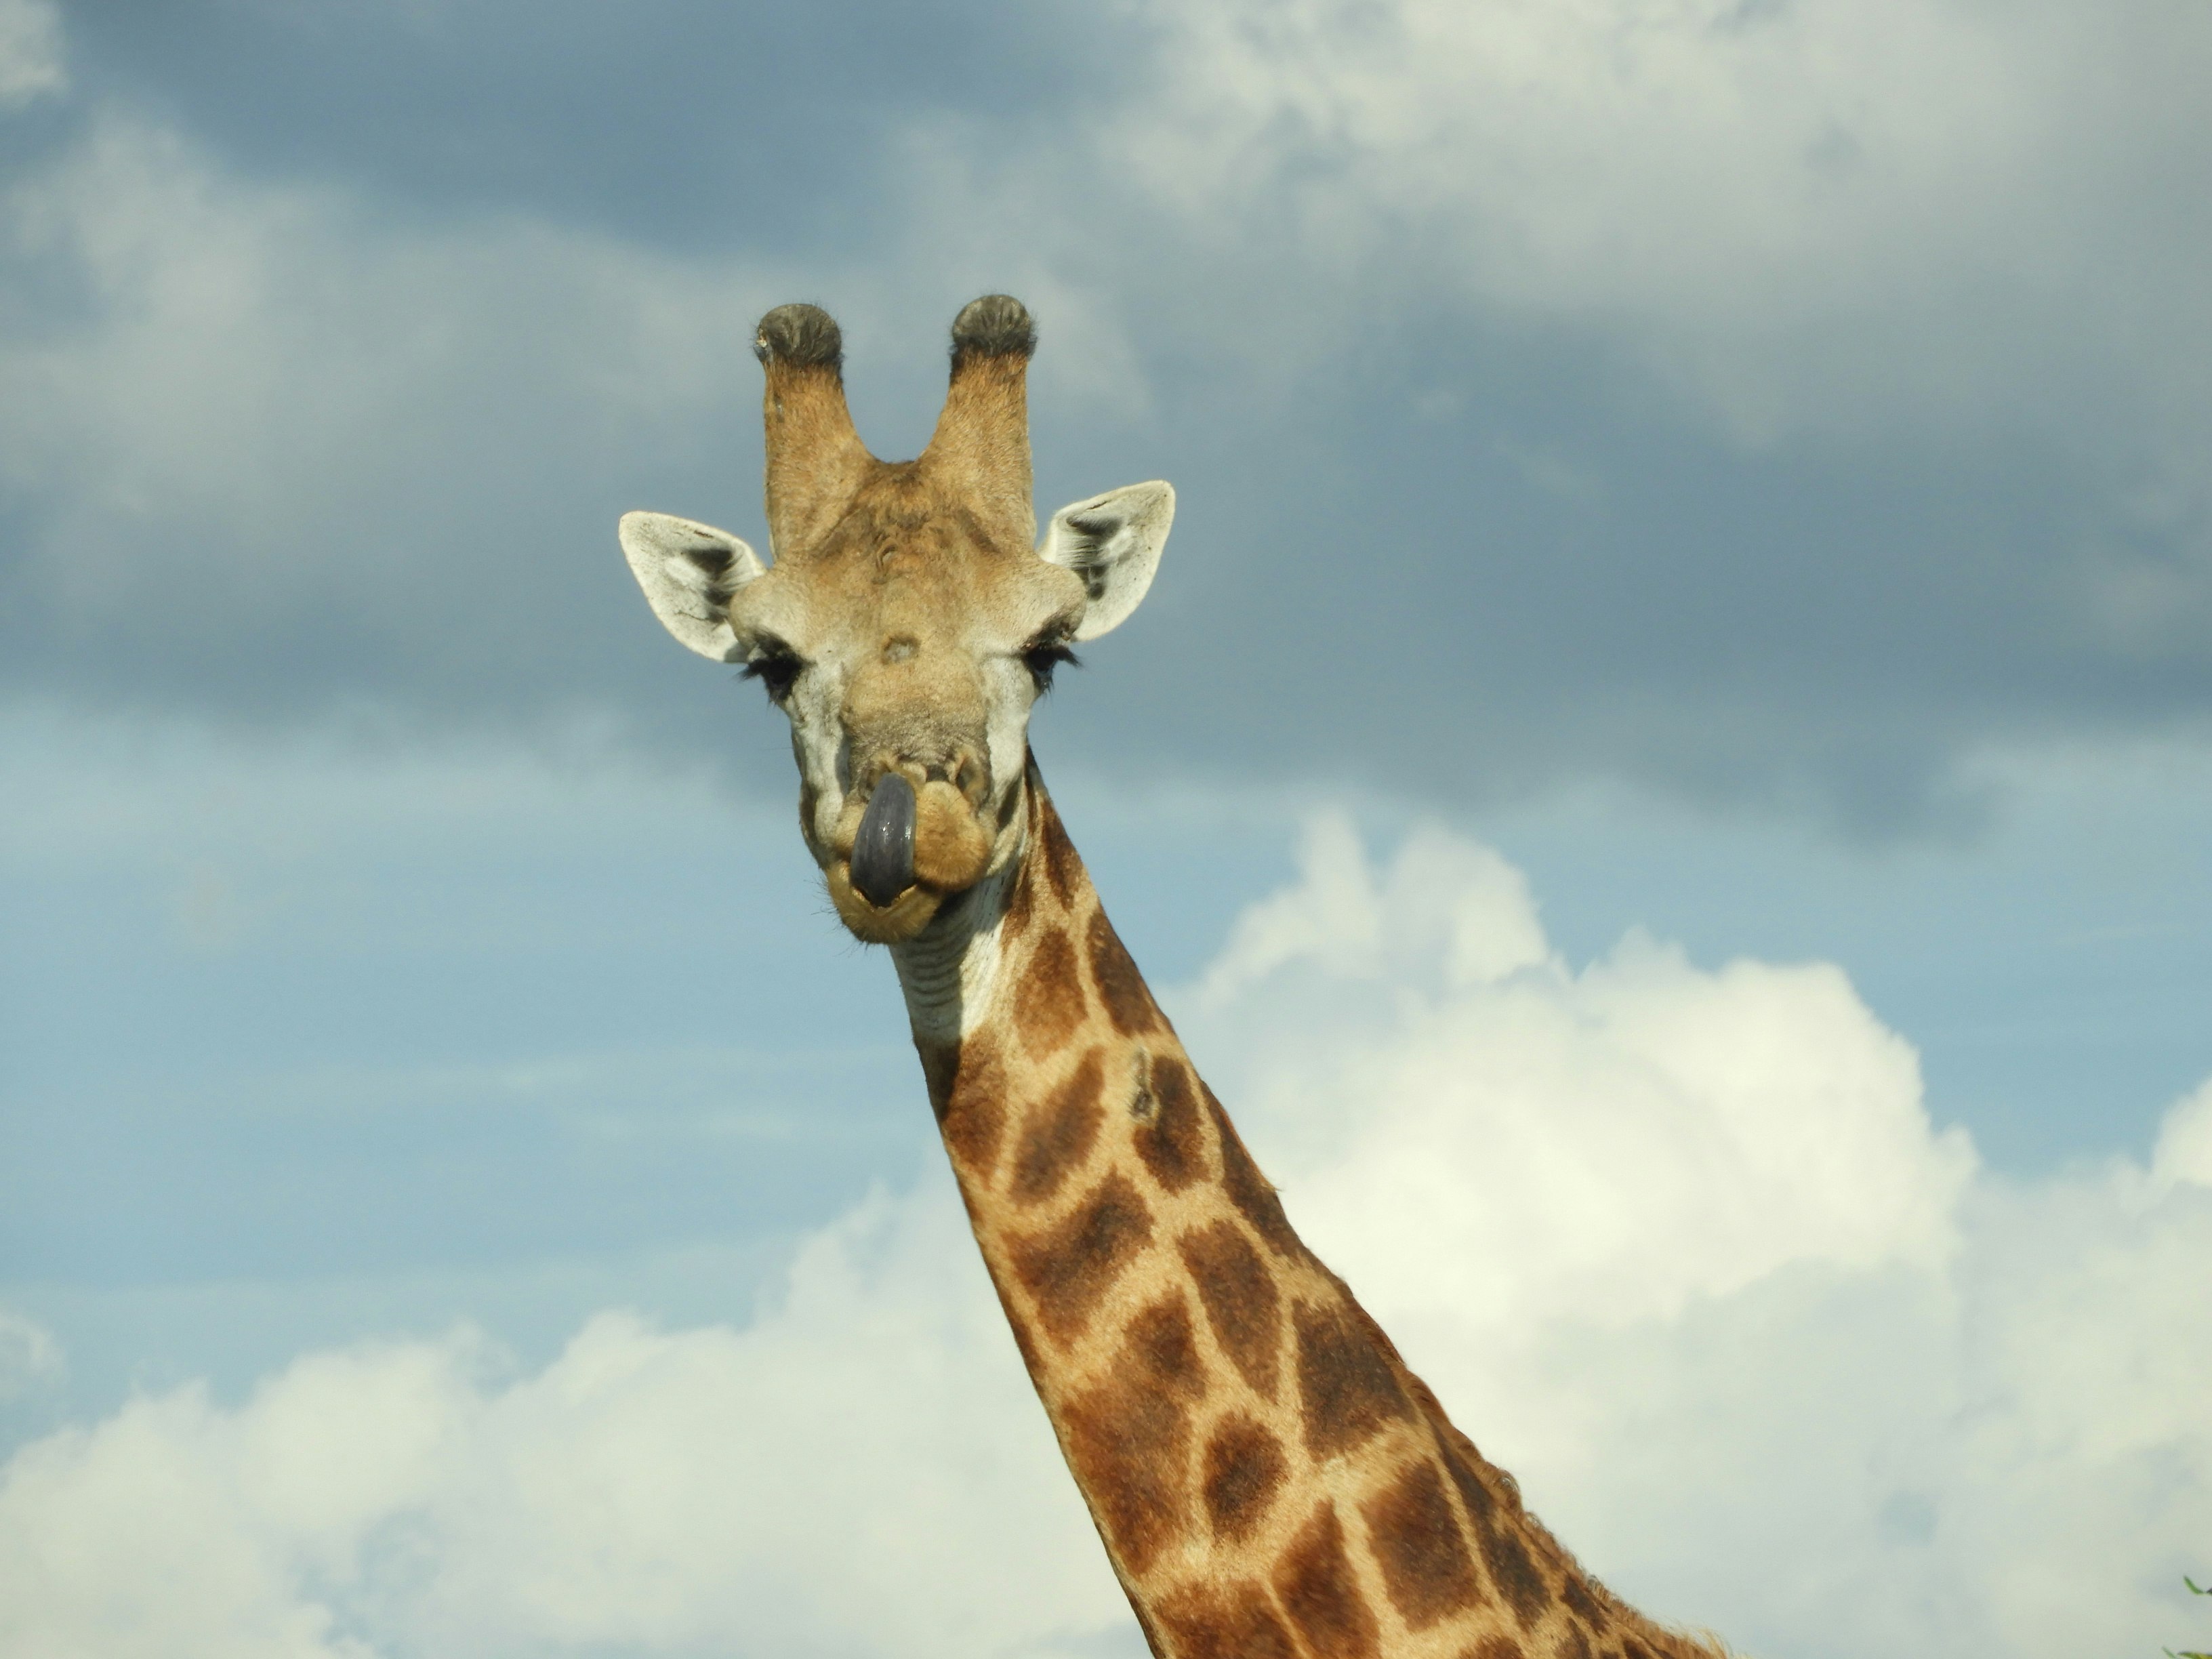 A giraffe in Kruger Park, South Africa